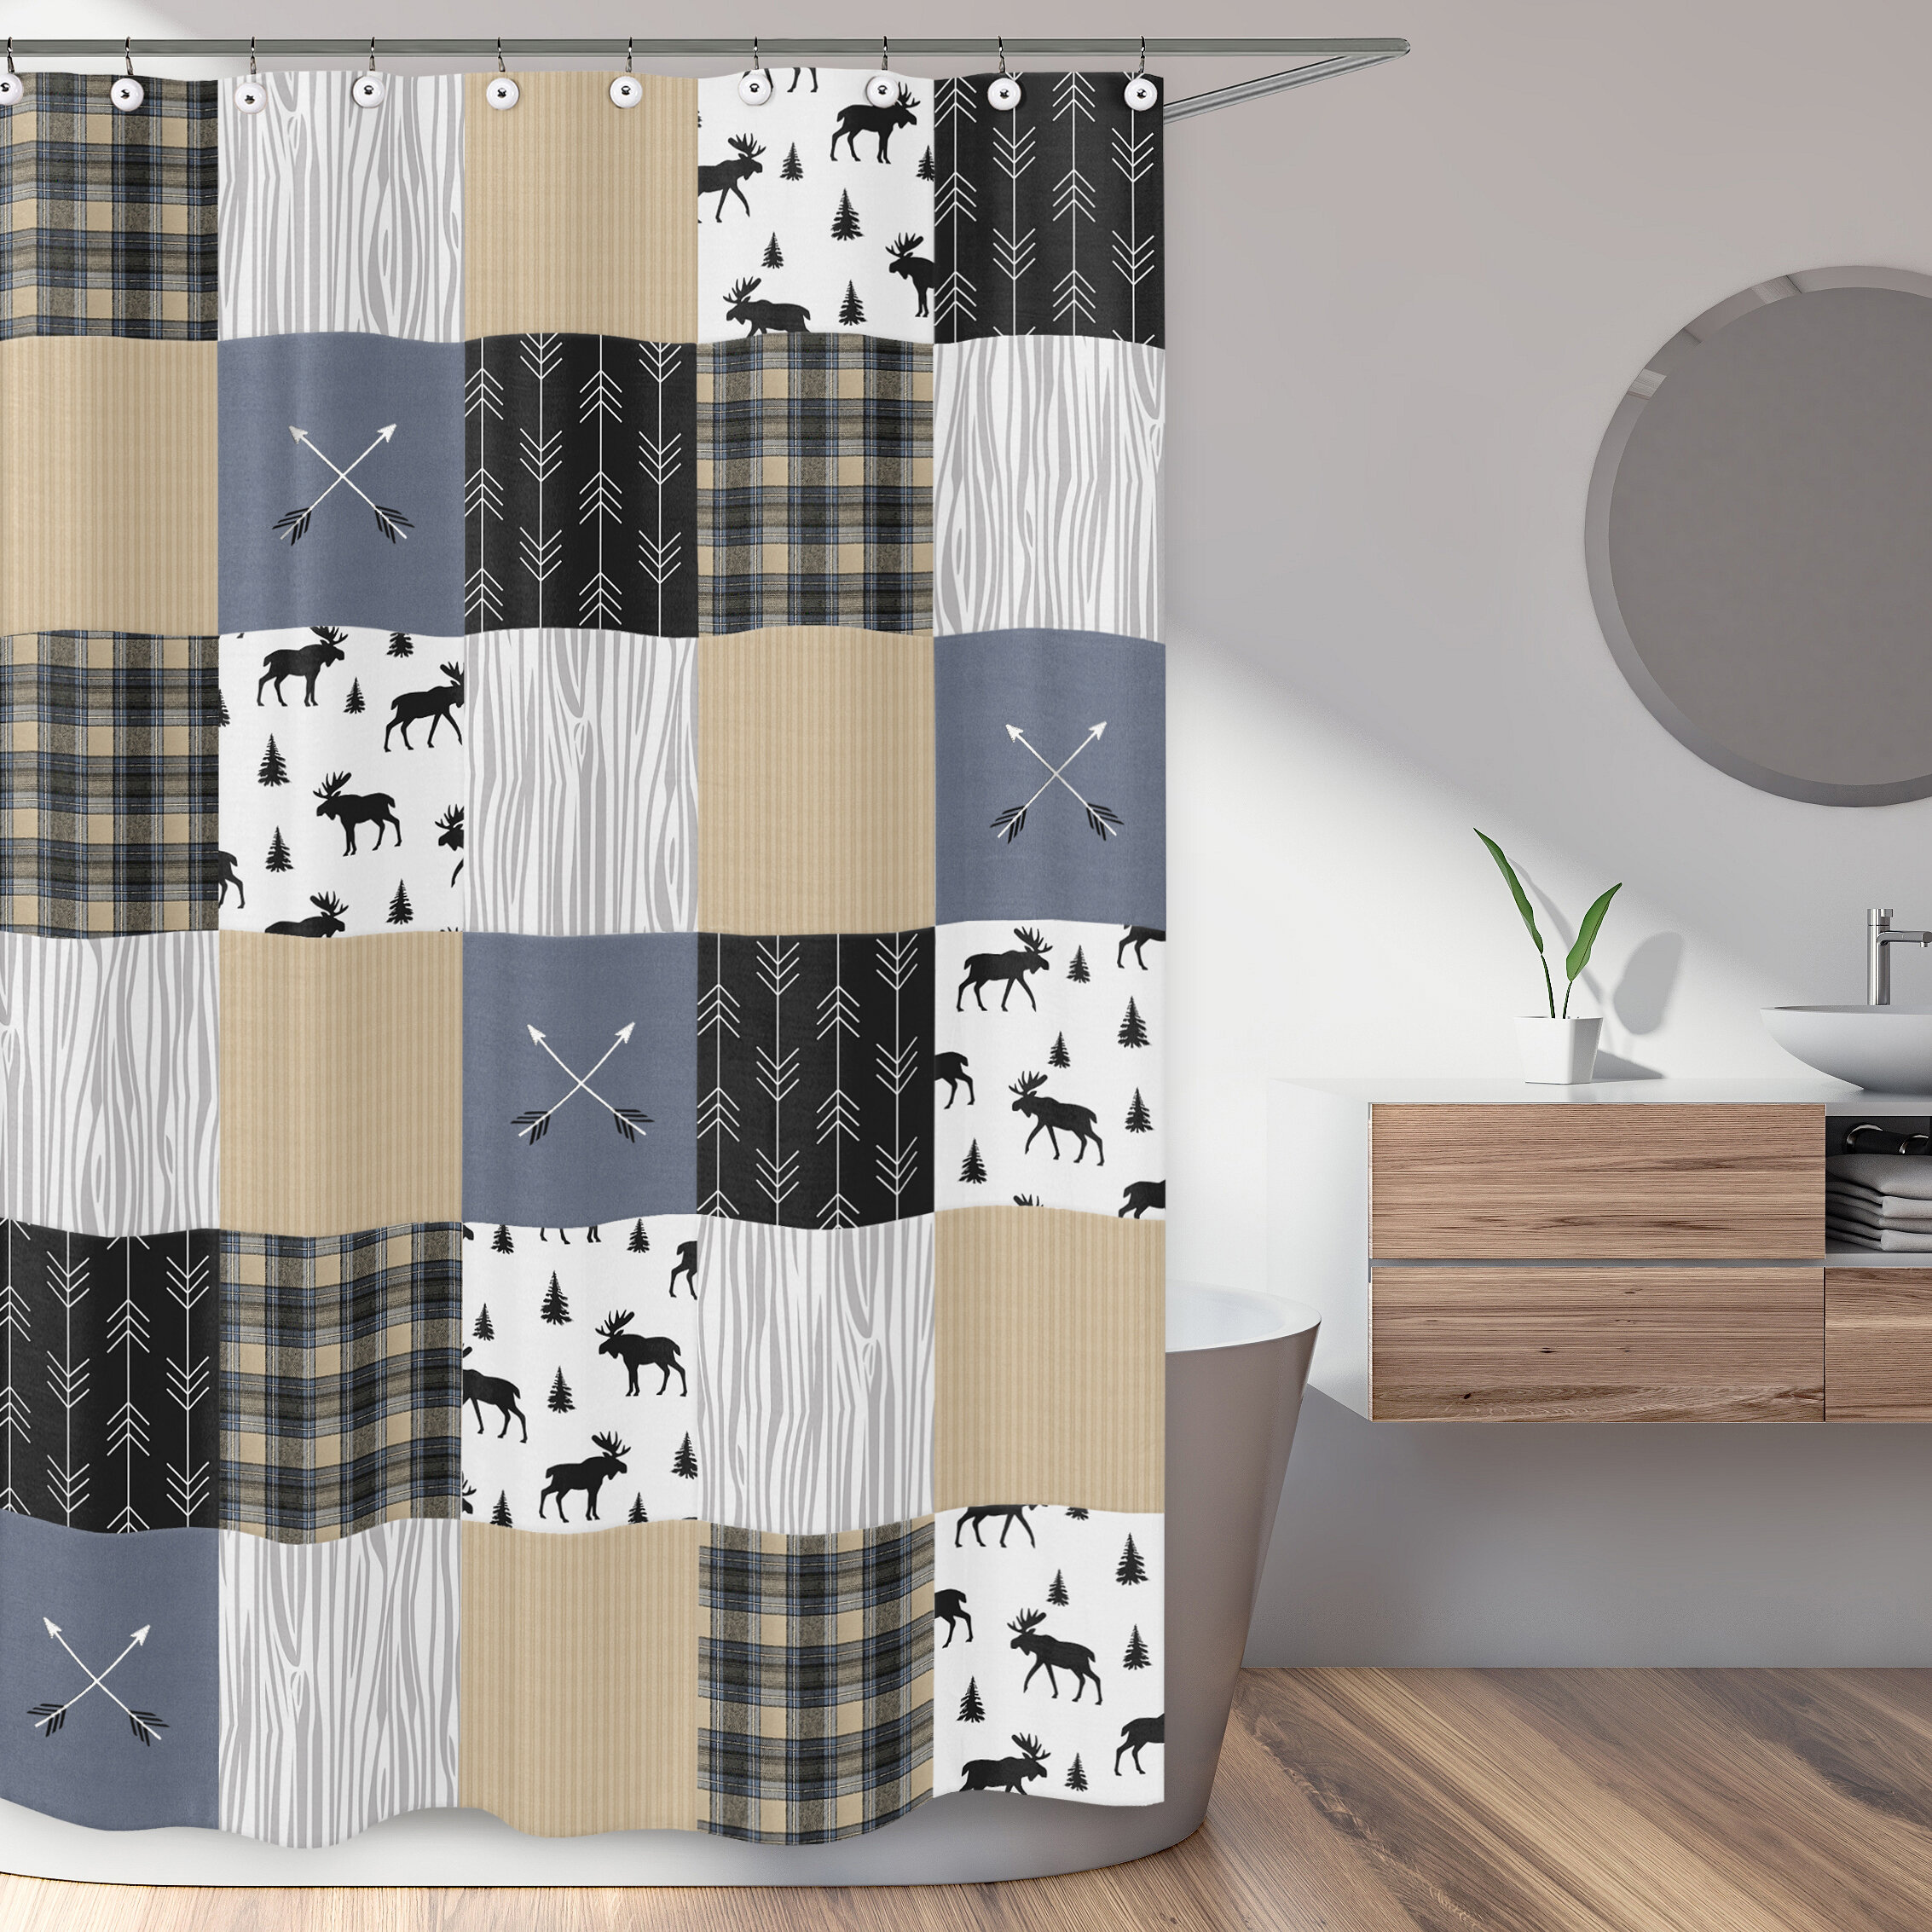 Rustic Board Creative Heart Shaped Cross Shower Curtain Liner Waterproof Fabric 